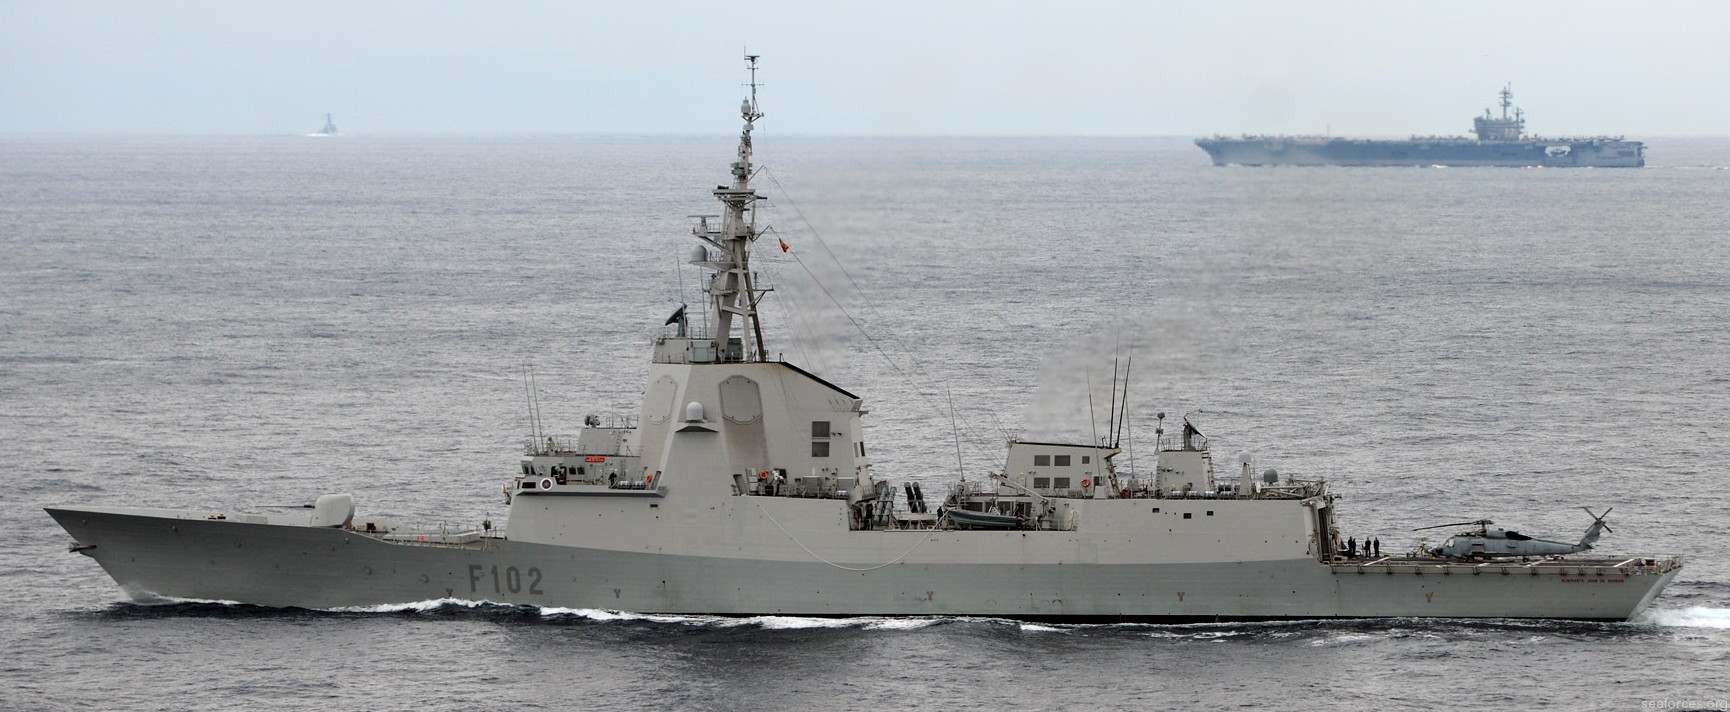 f-102 sps almirante juan de borbon f100 class guided missile frigate spanish navy izar ferrol